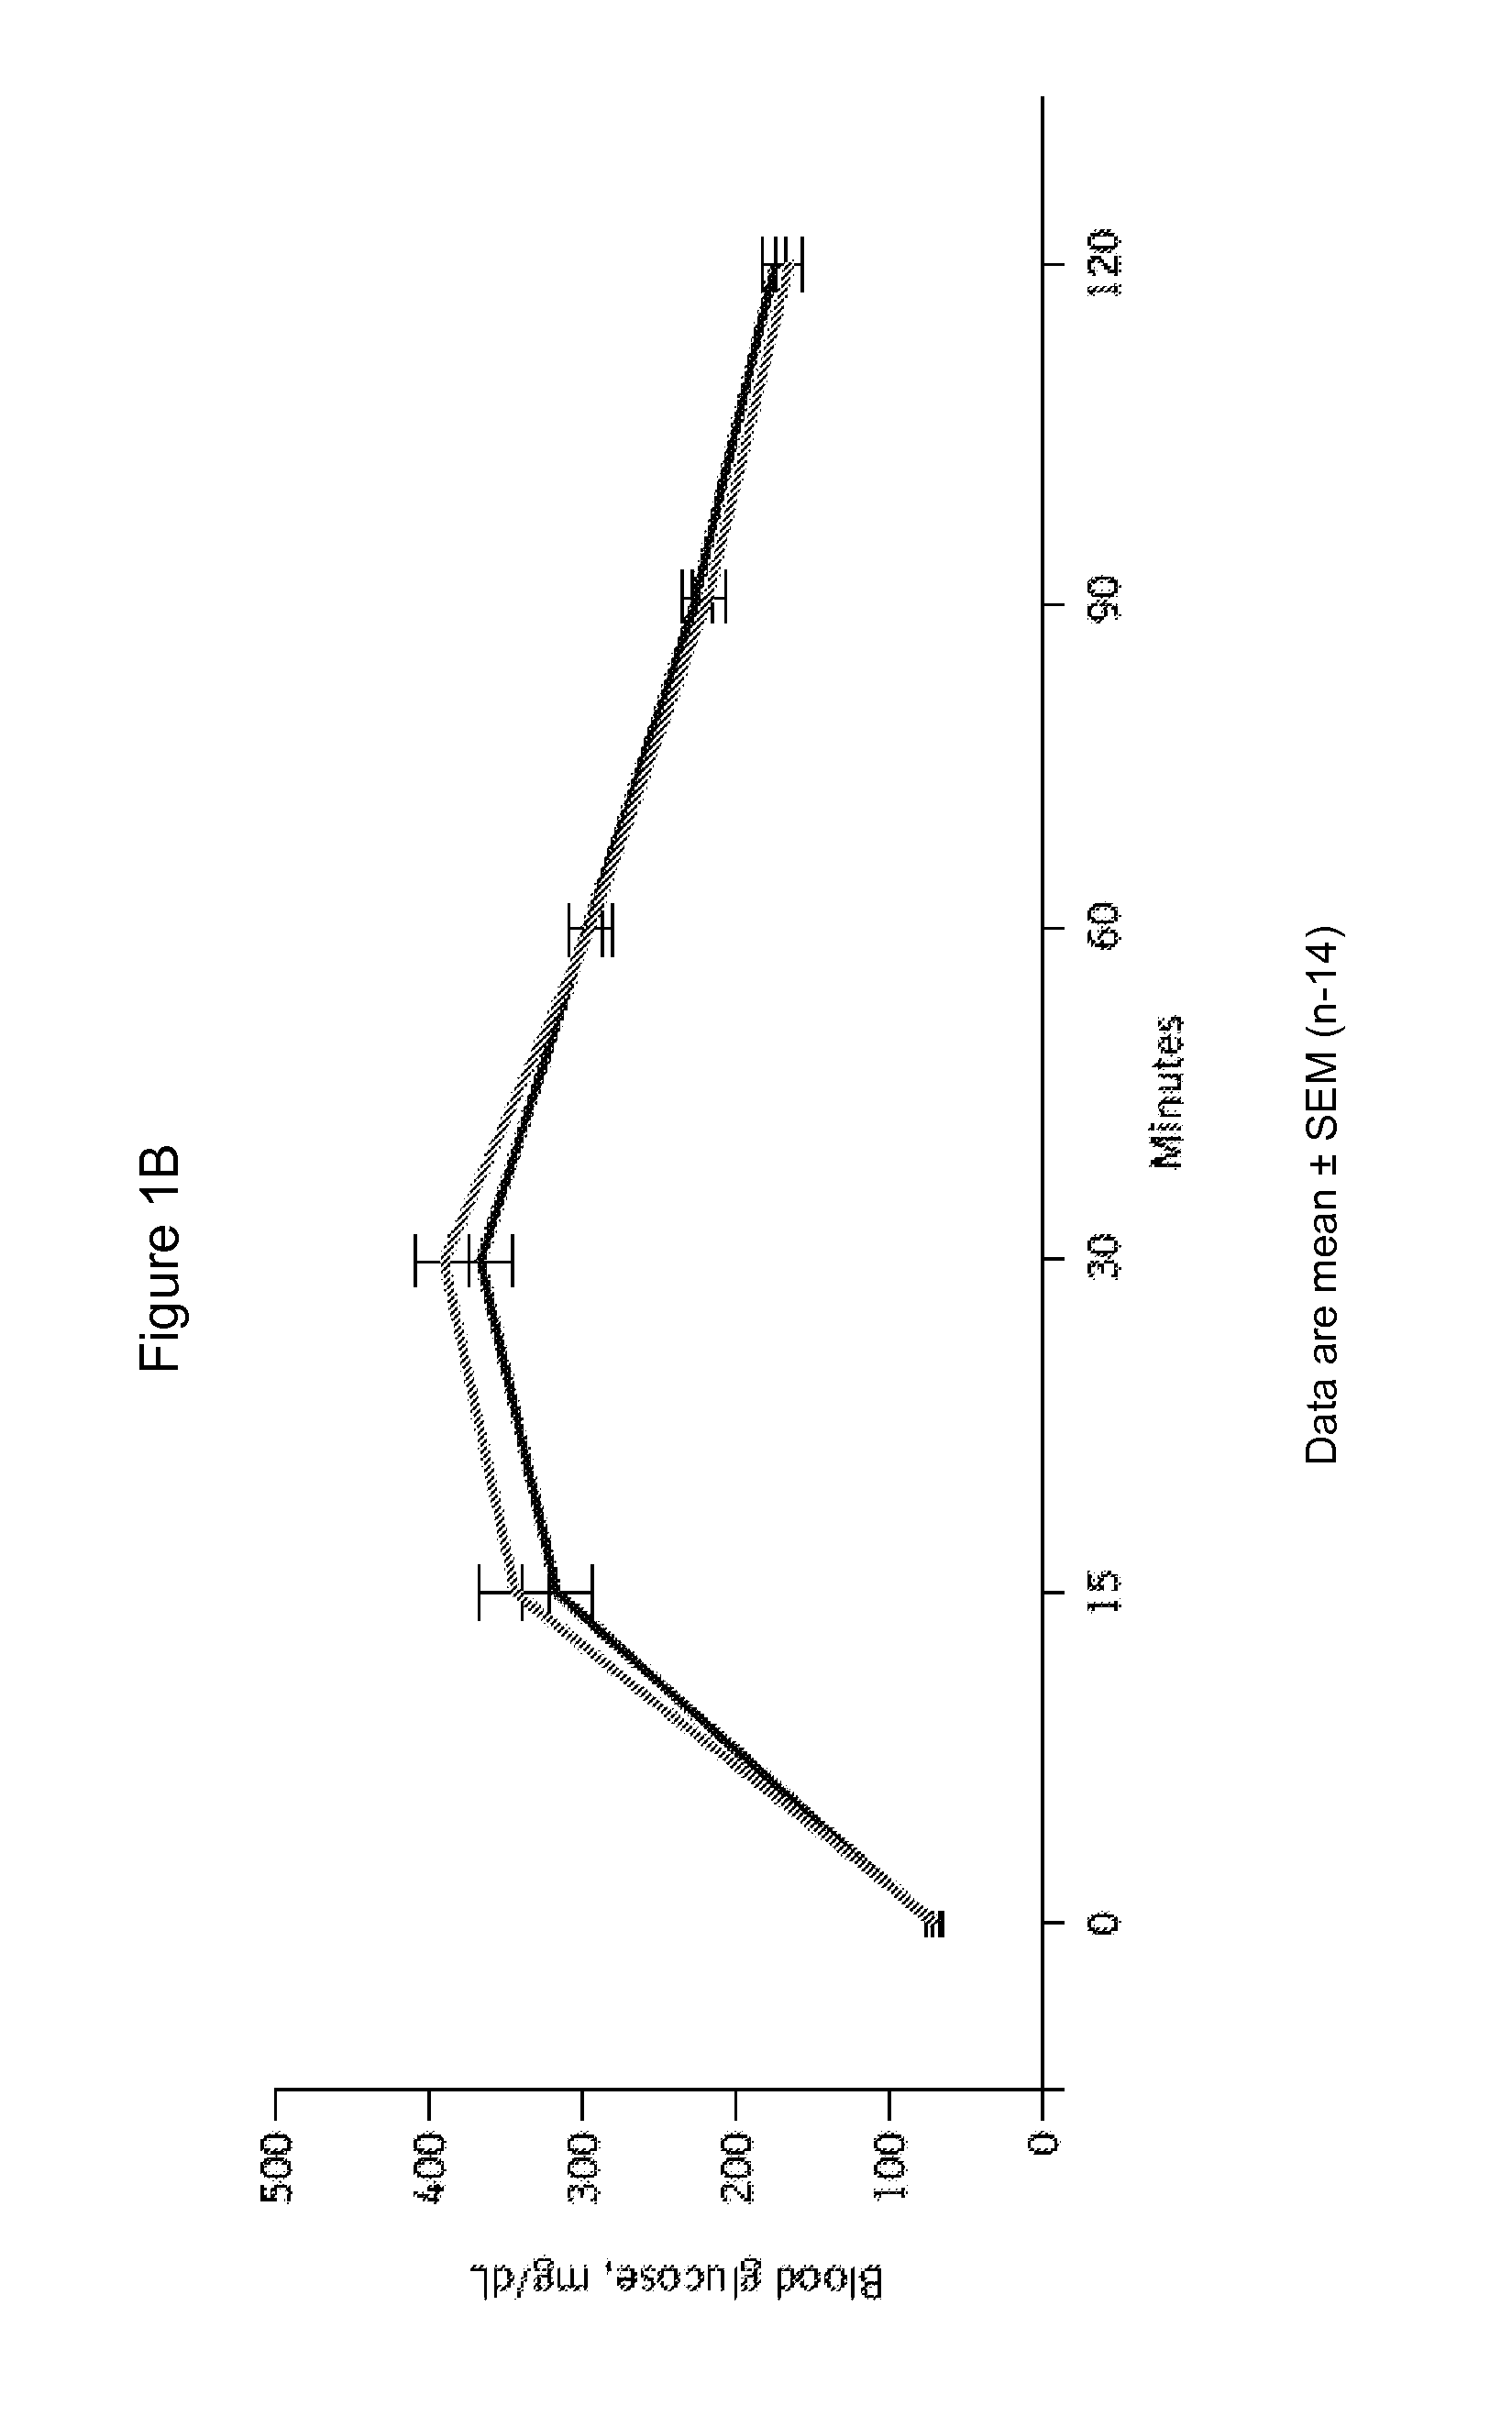 Medical use of a dpp-4 inhibitor